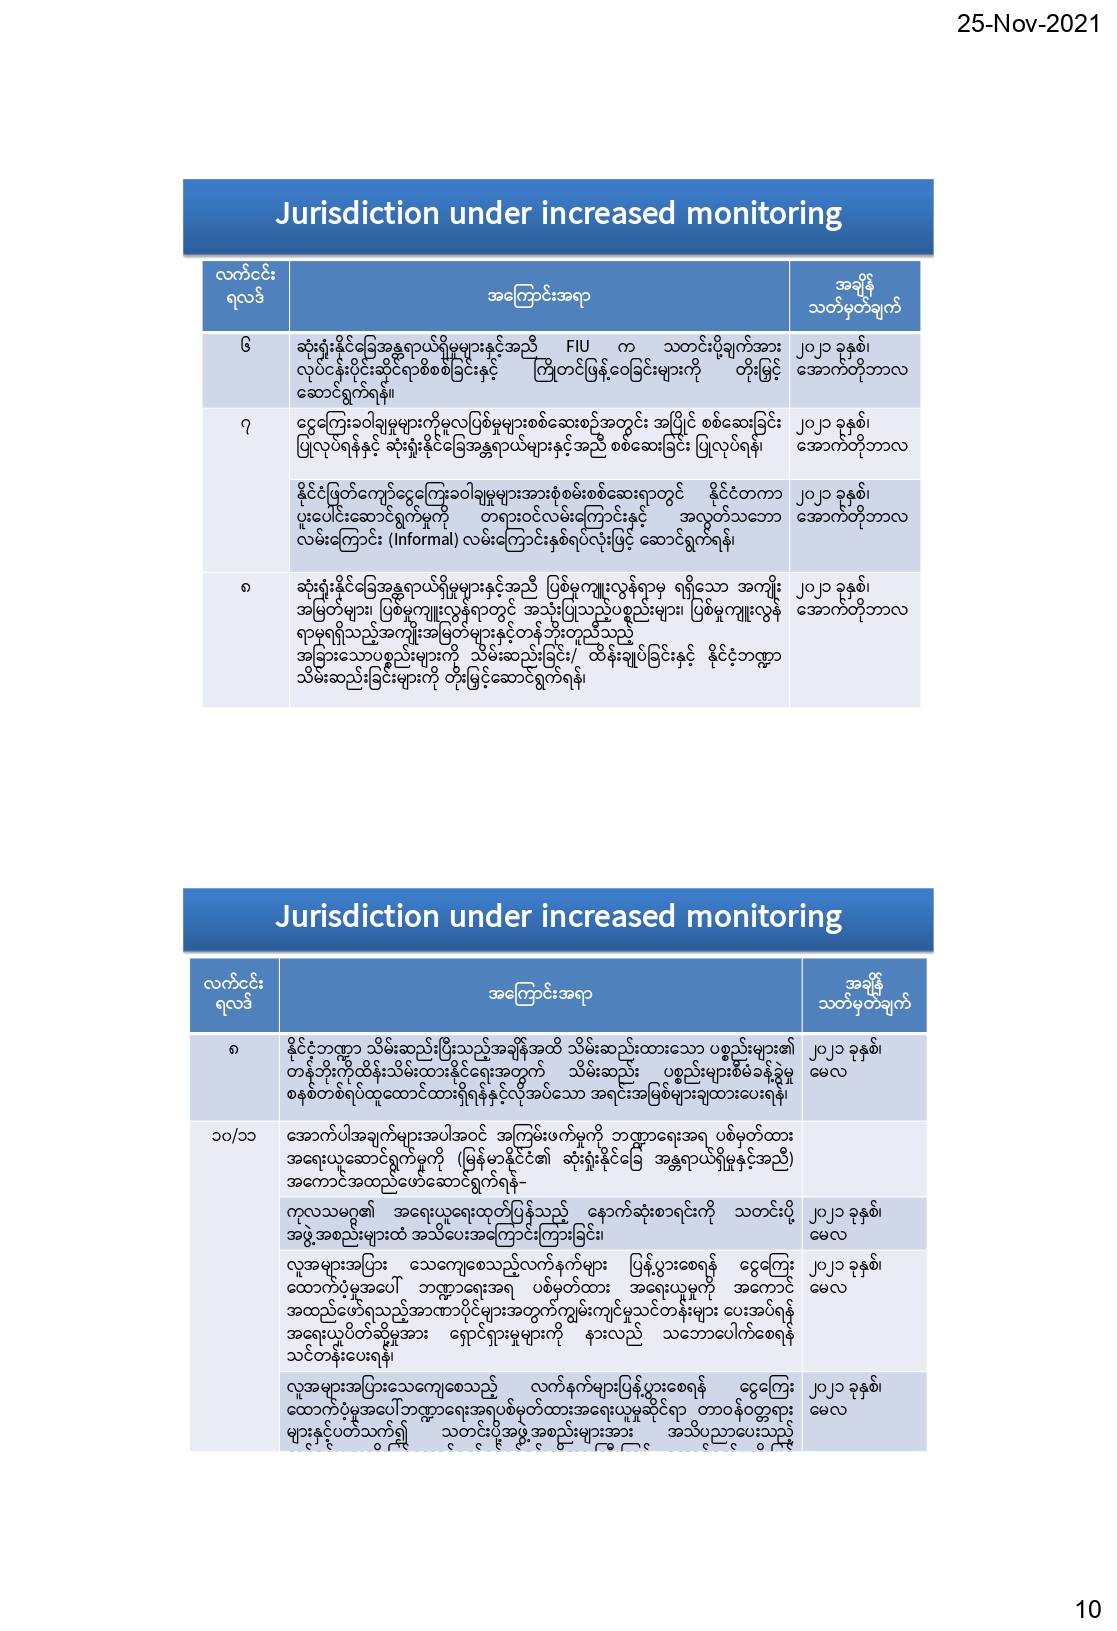 International Standard & Myanmar Effort AML